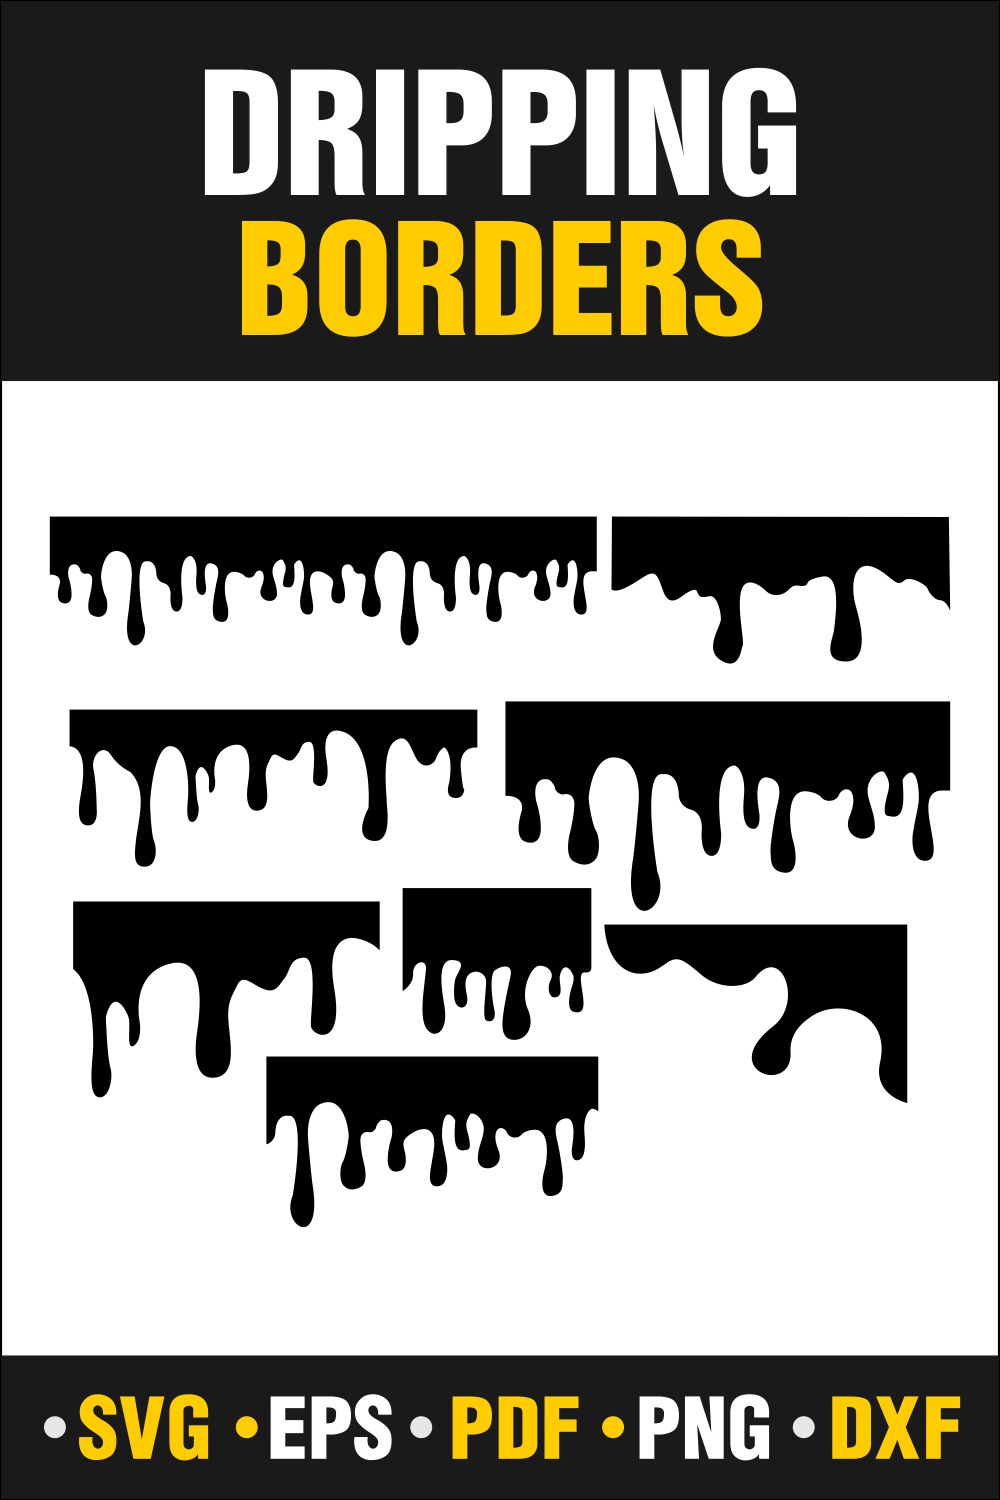 Dripping Borders pinterest image.